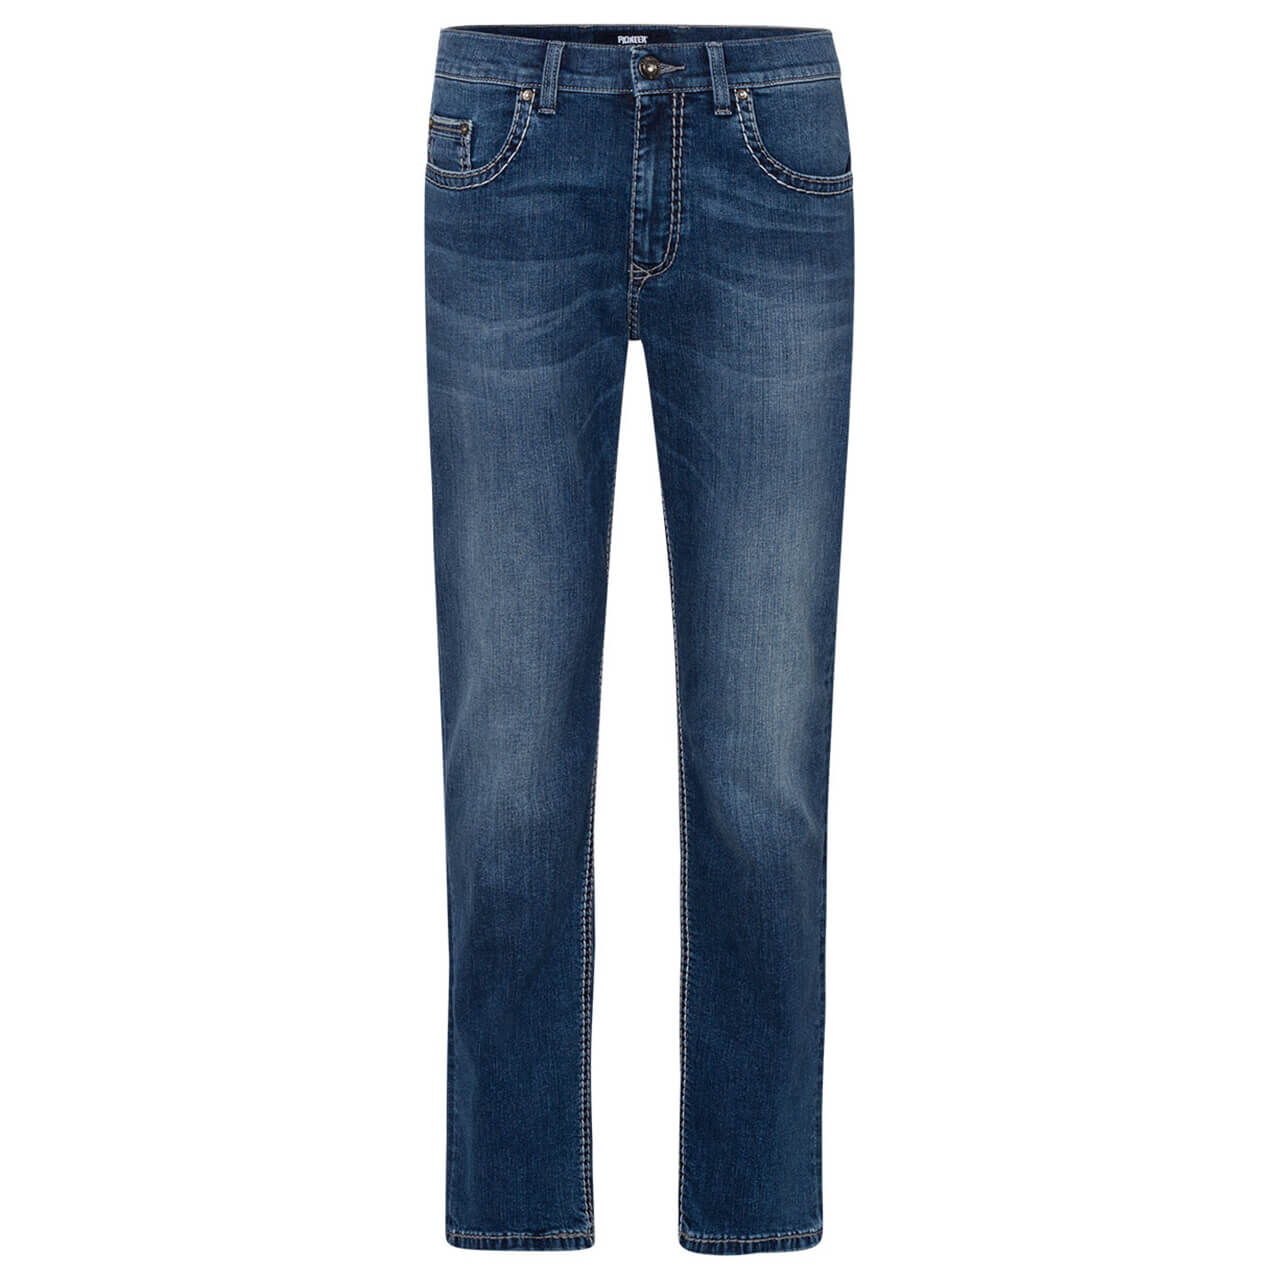 Pioneer Rando Jeans Megaflex blue used buffies